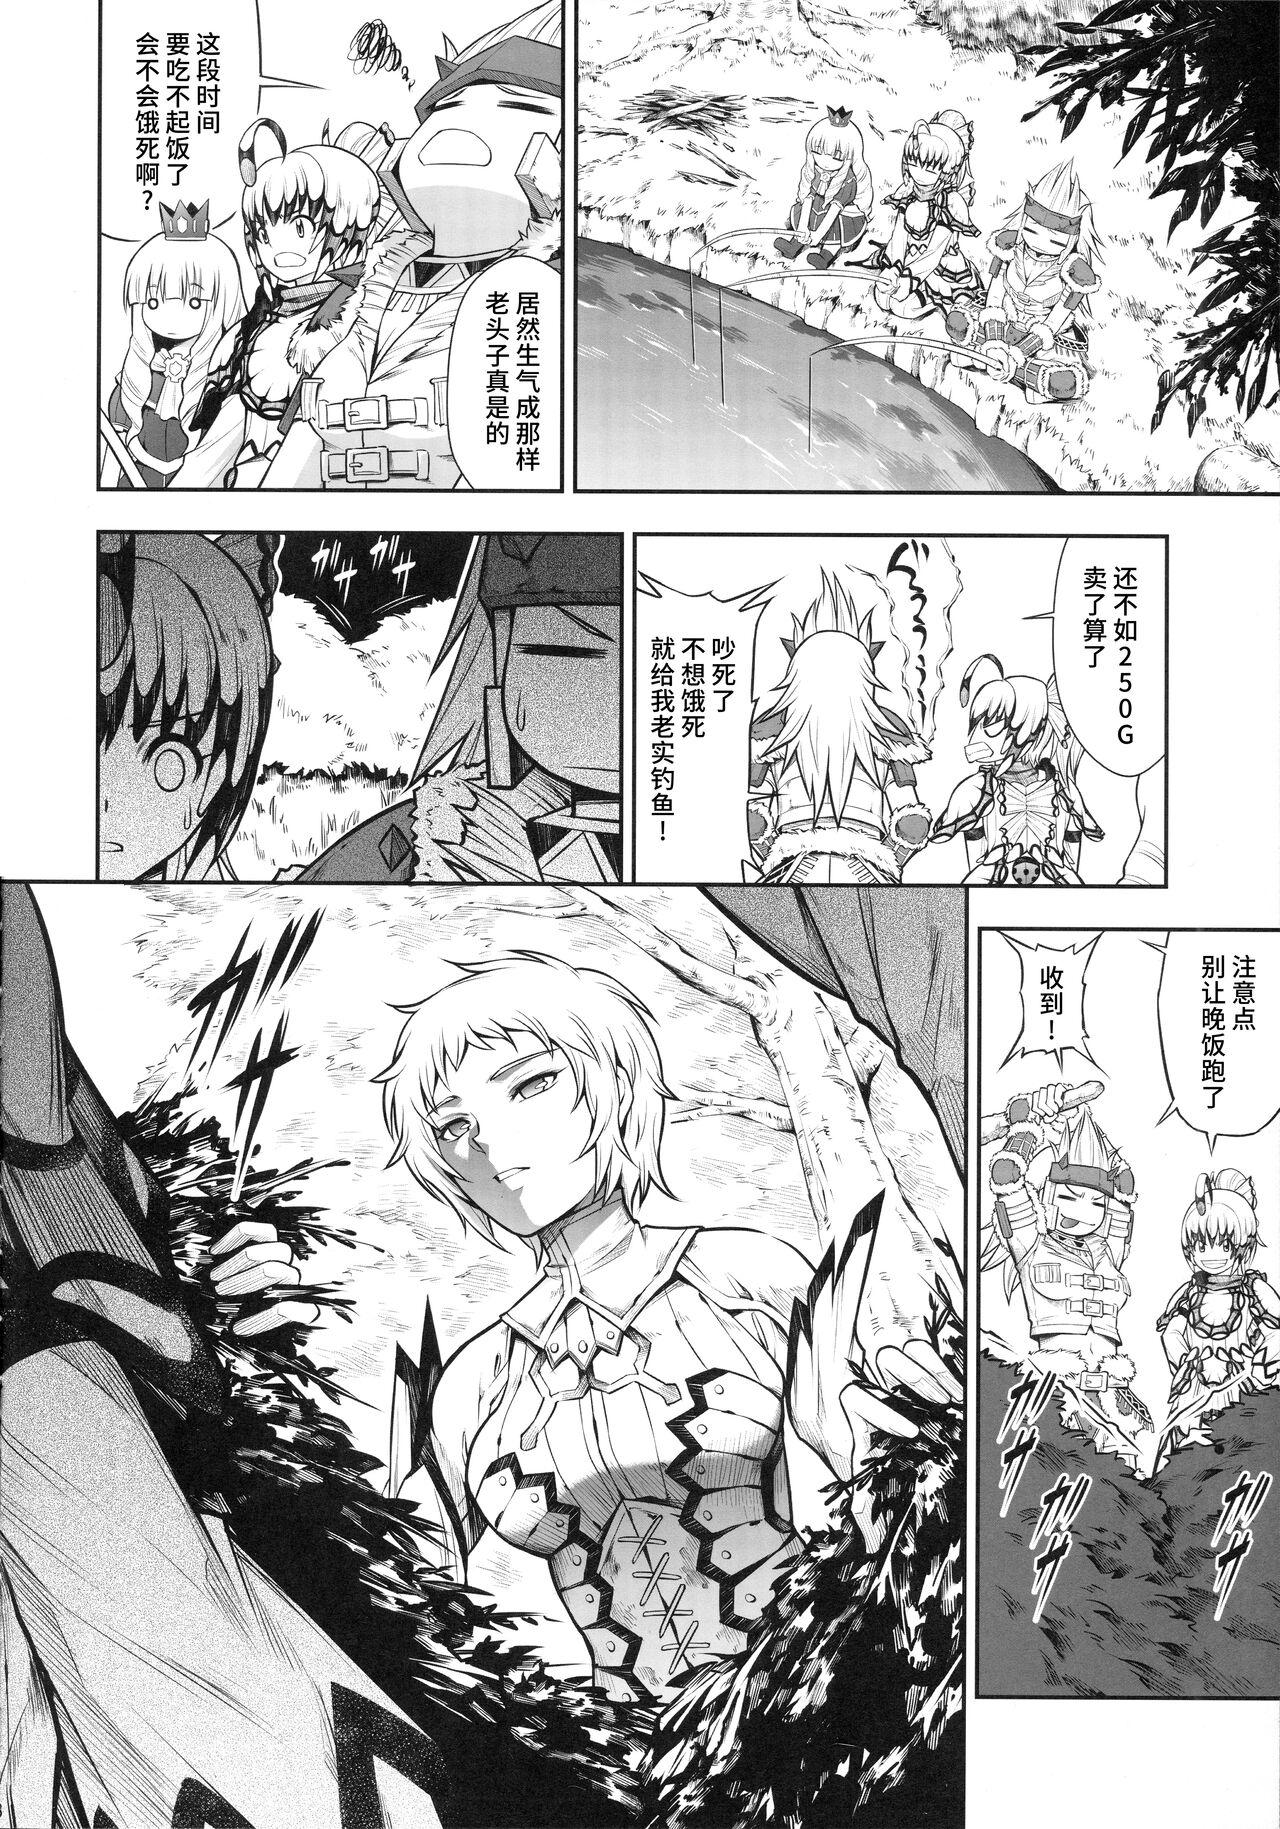 Mom Solo Hunter no Seitai WORLD 9 - Monster hunter Assfucked - Page 7